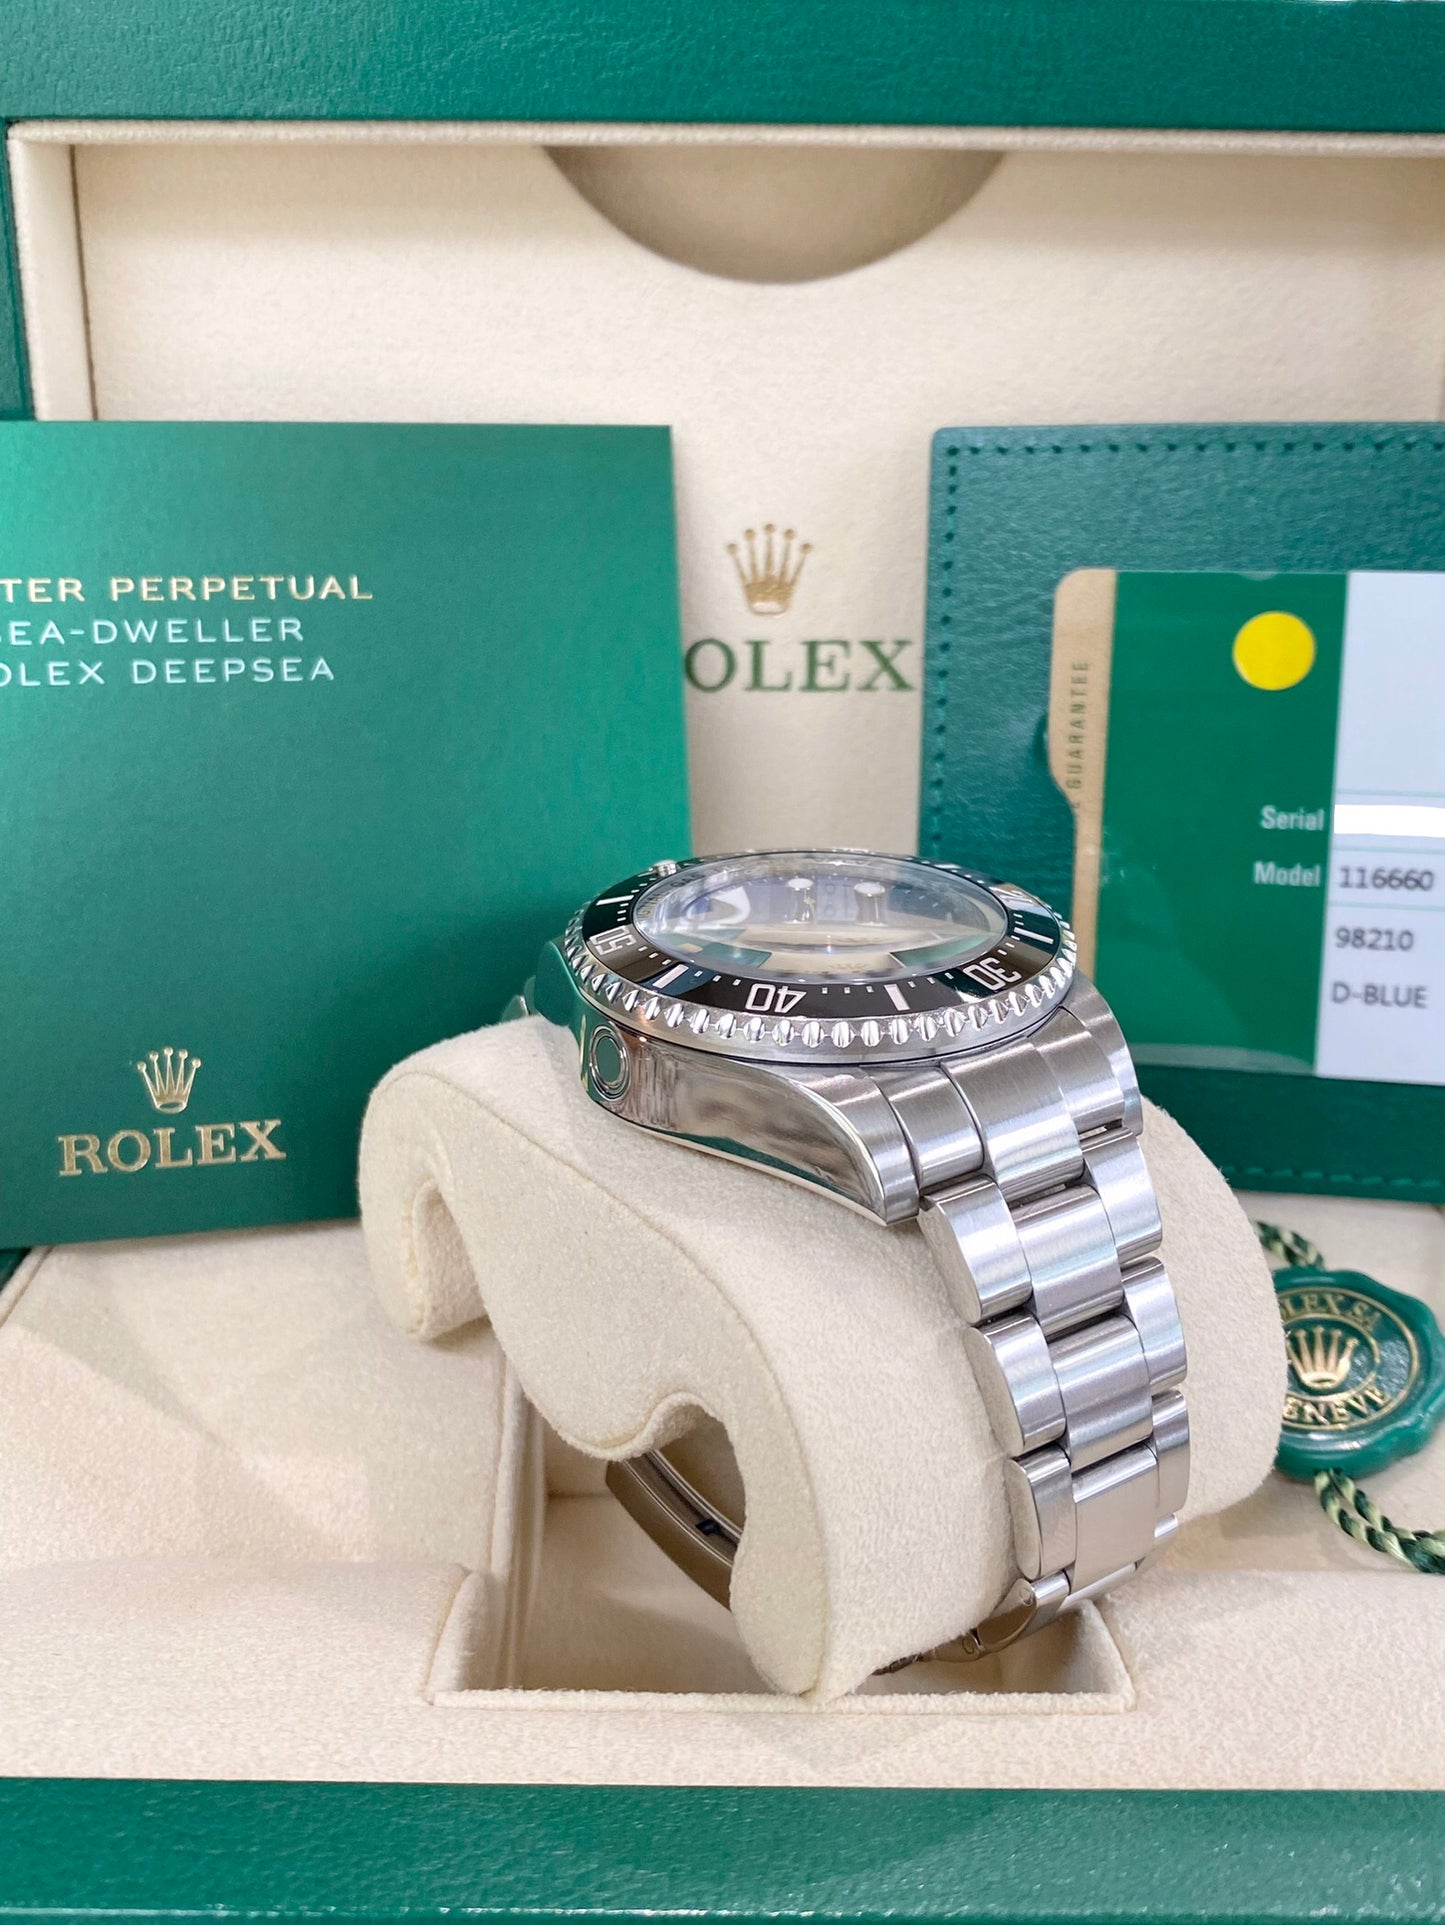 2016 Rolex Deepsea 116660